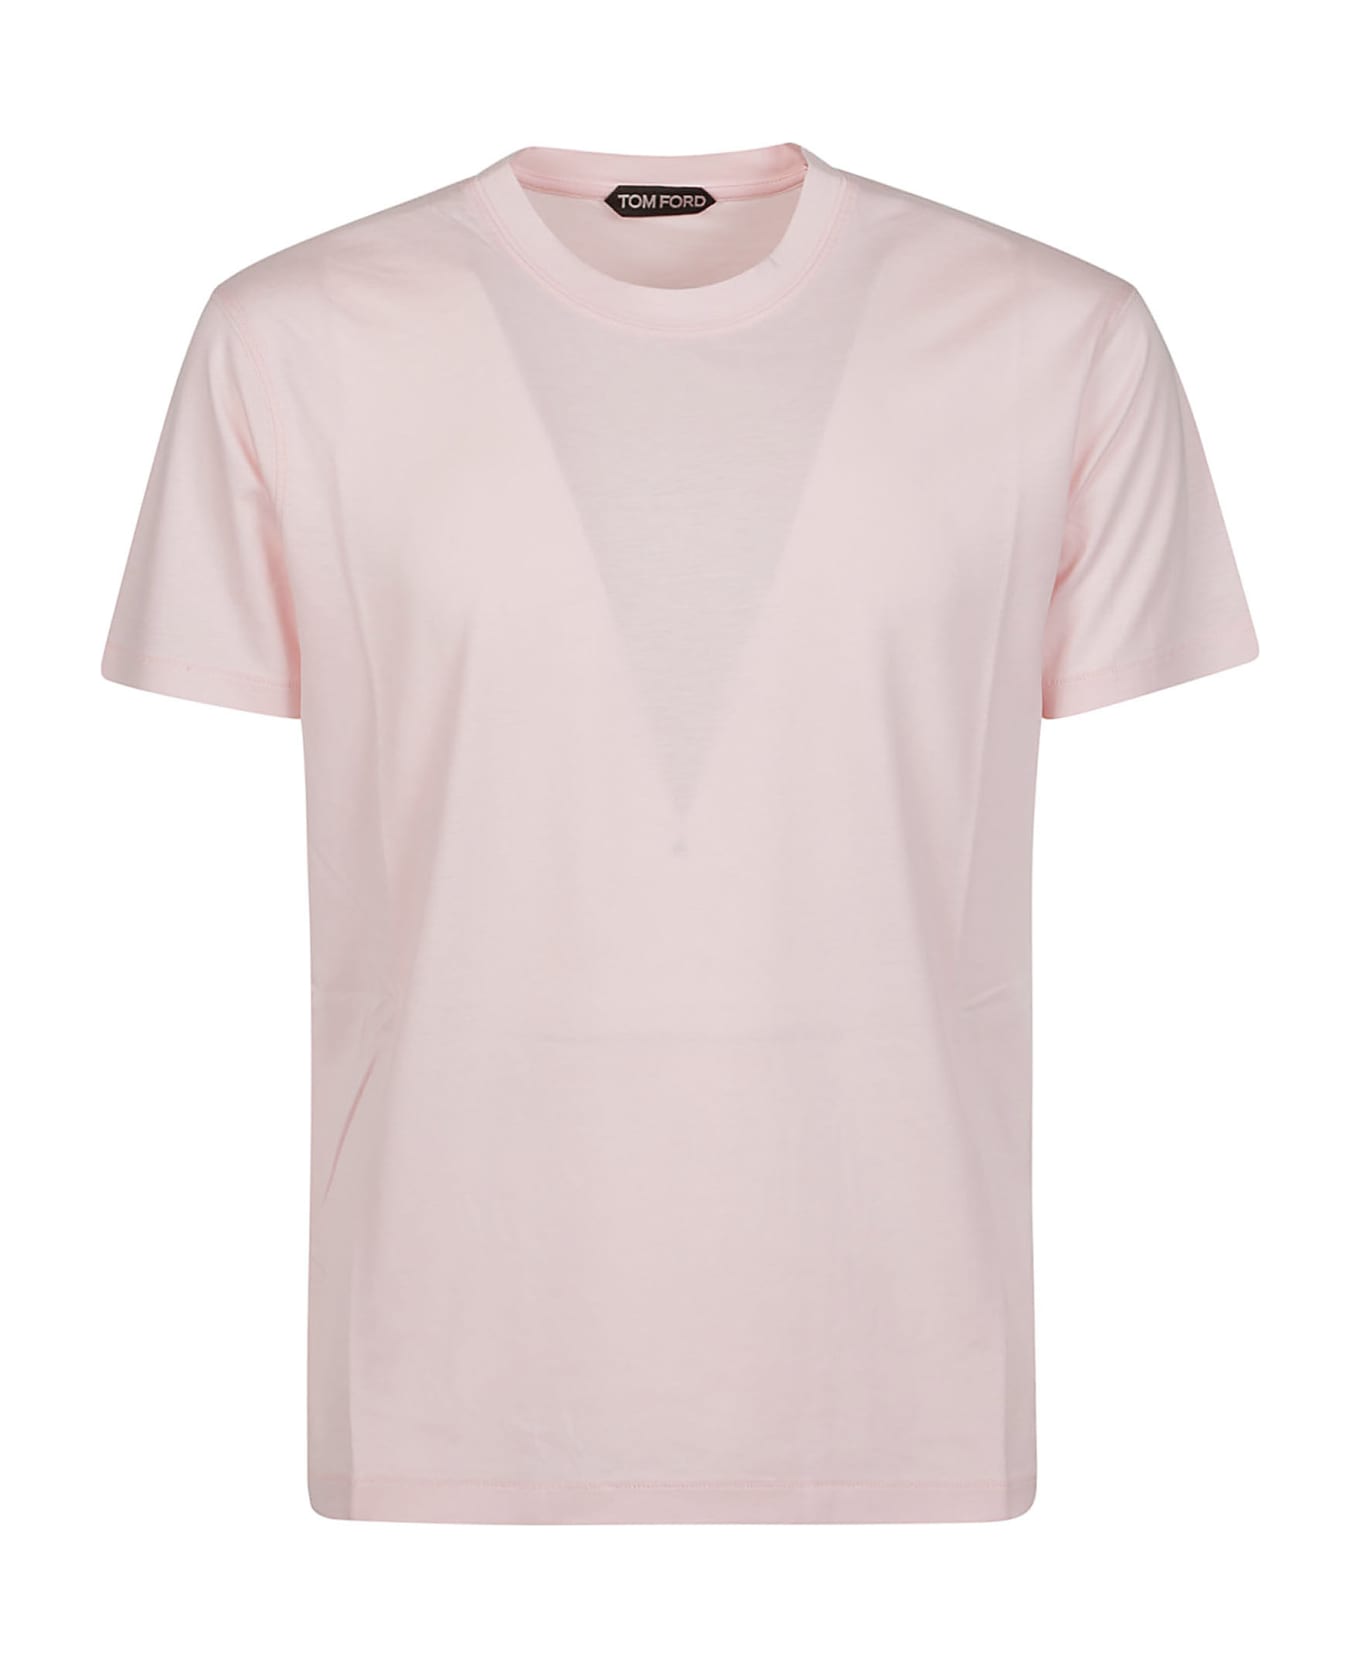 Tom Ford T-shirt - Light Pink シャツ